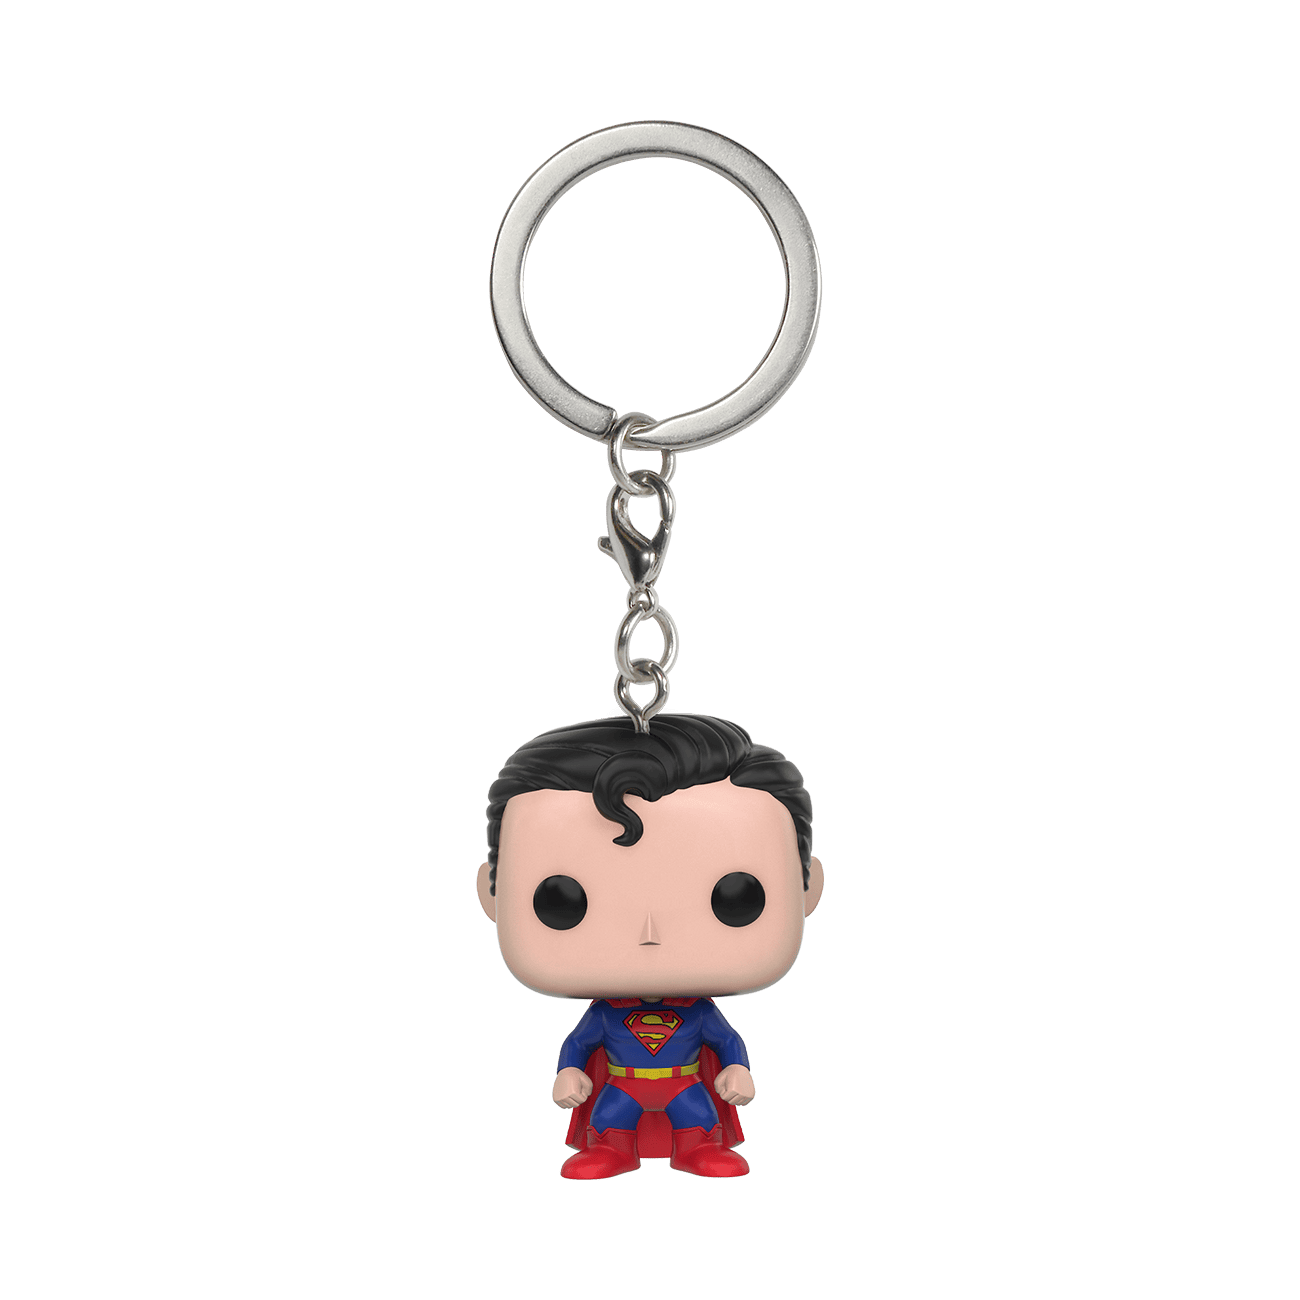 Buy Pop! Superman at Funko.